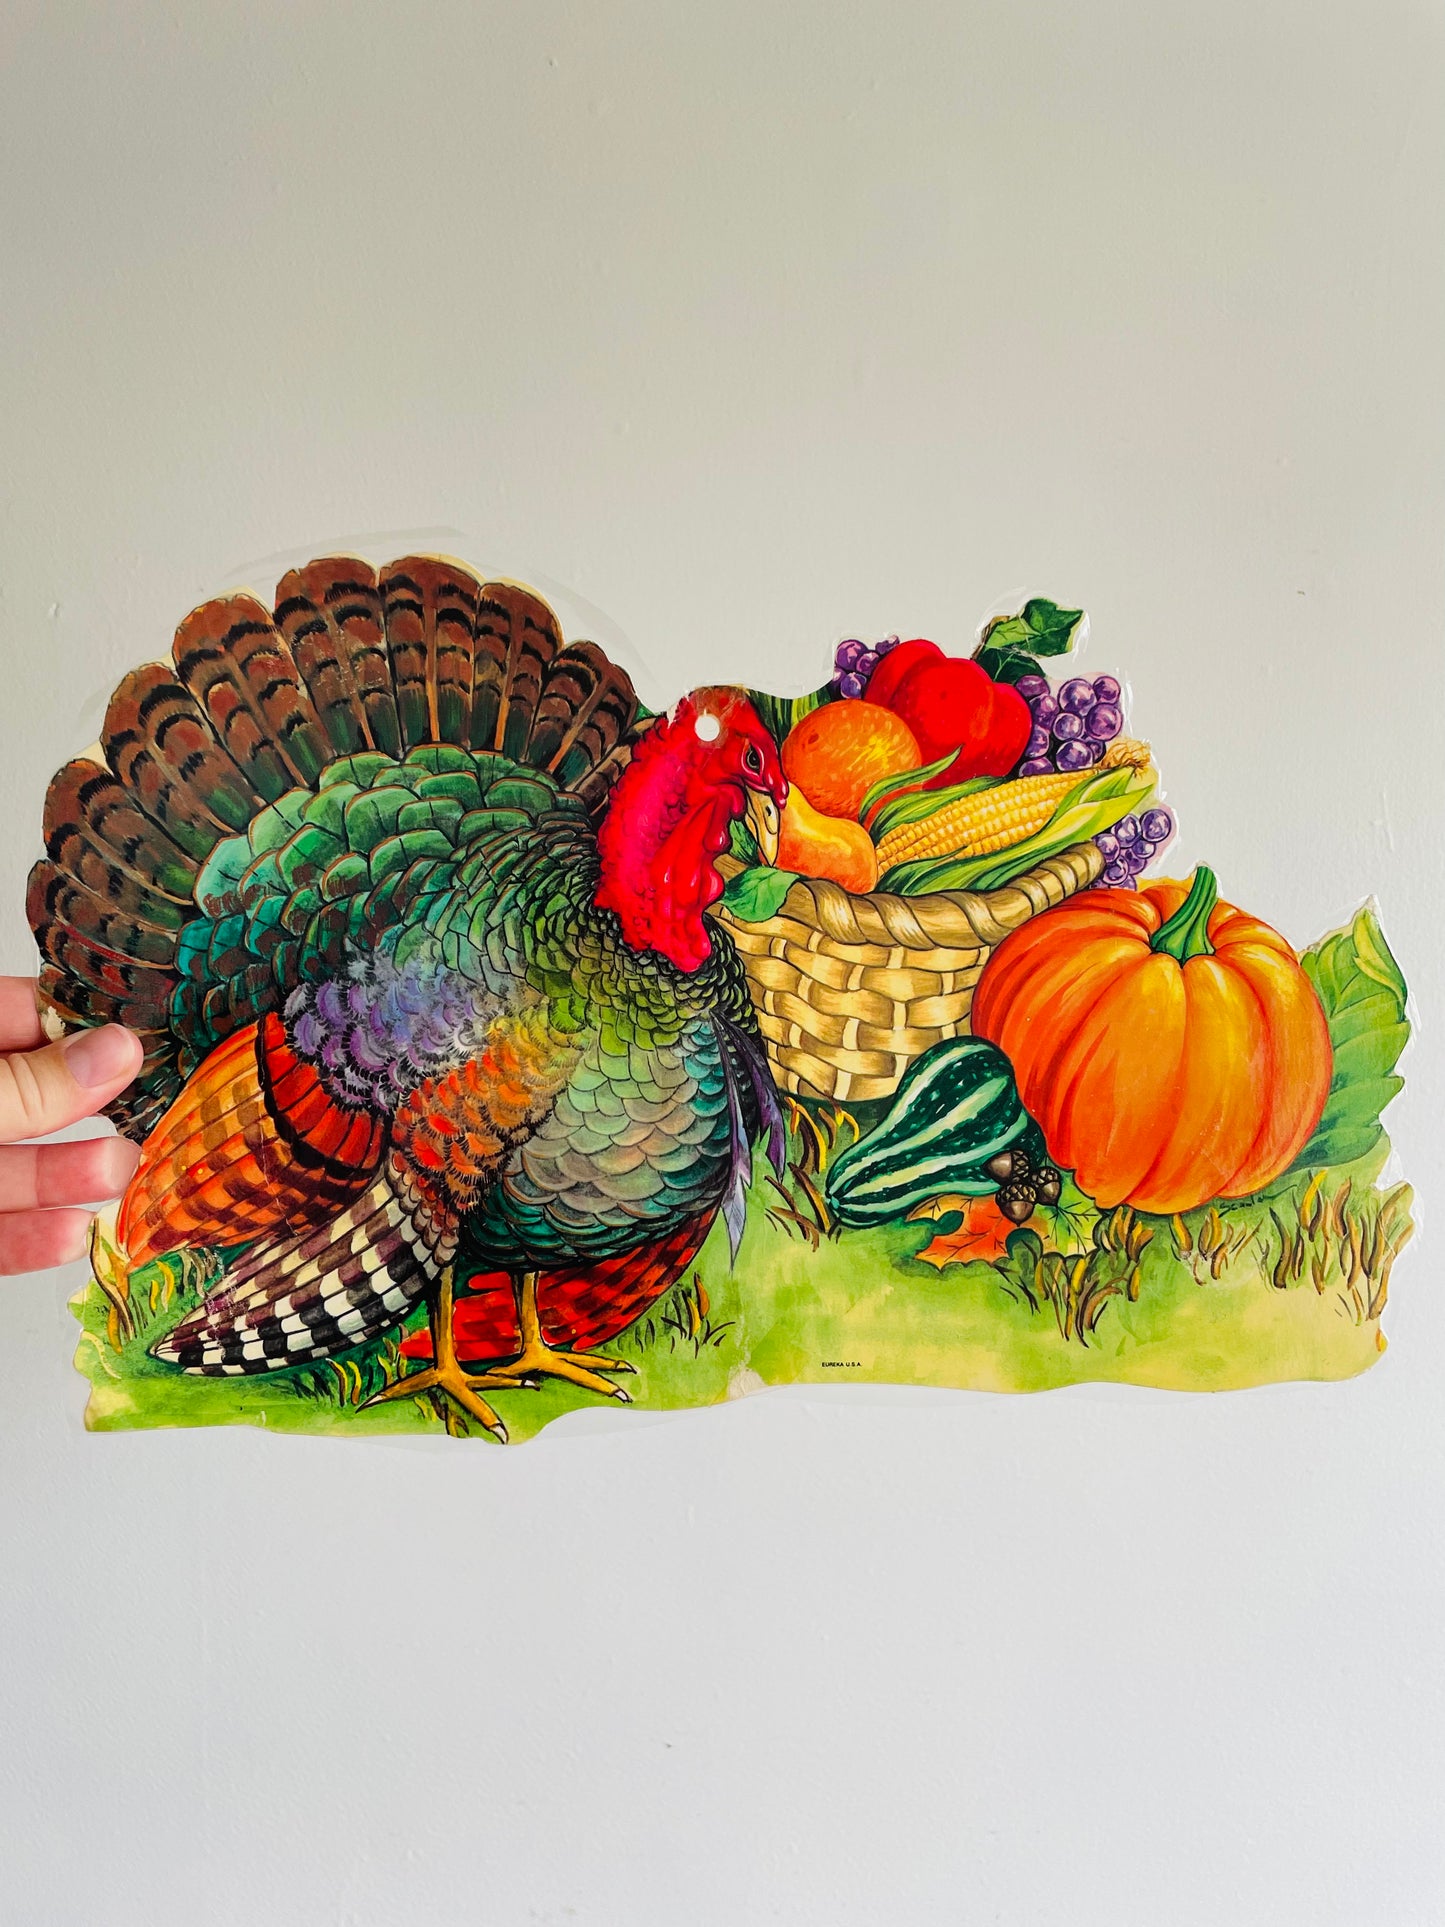 Vintage Thanksgiving Cardboard Cutout - Turkey with Bountiful Harvest # 1